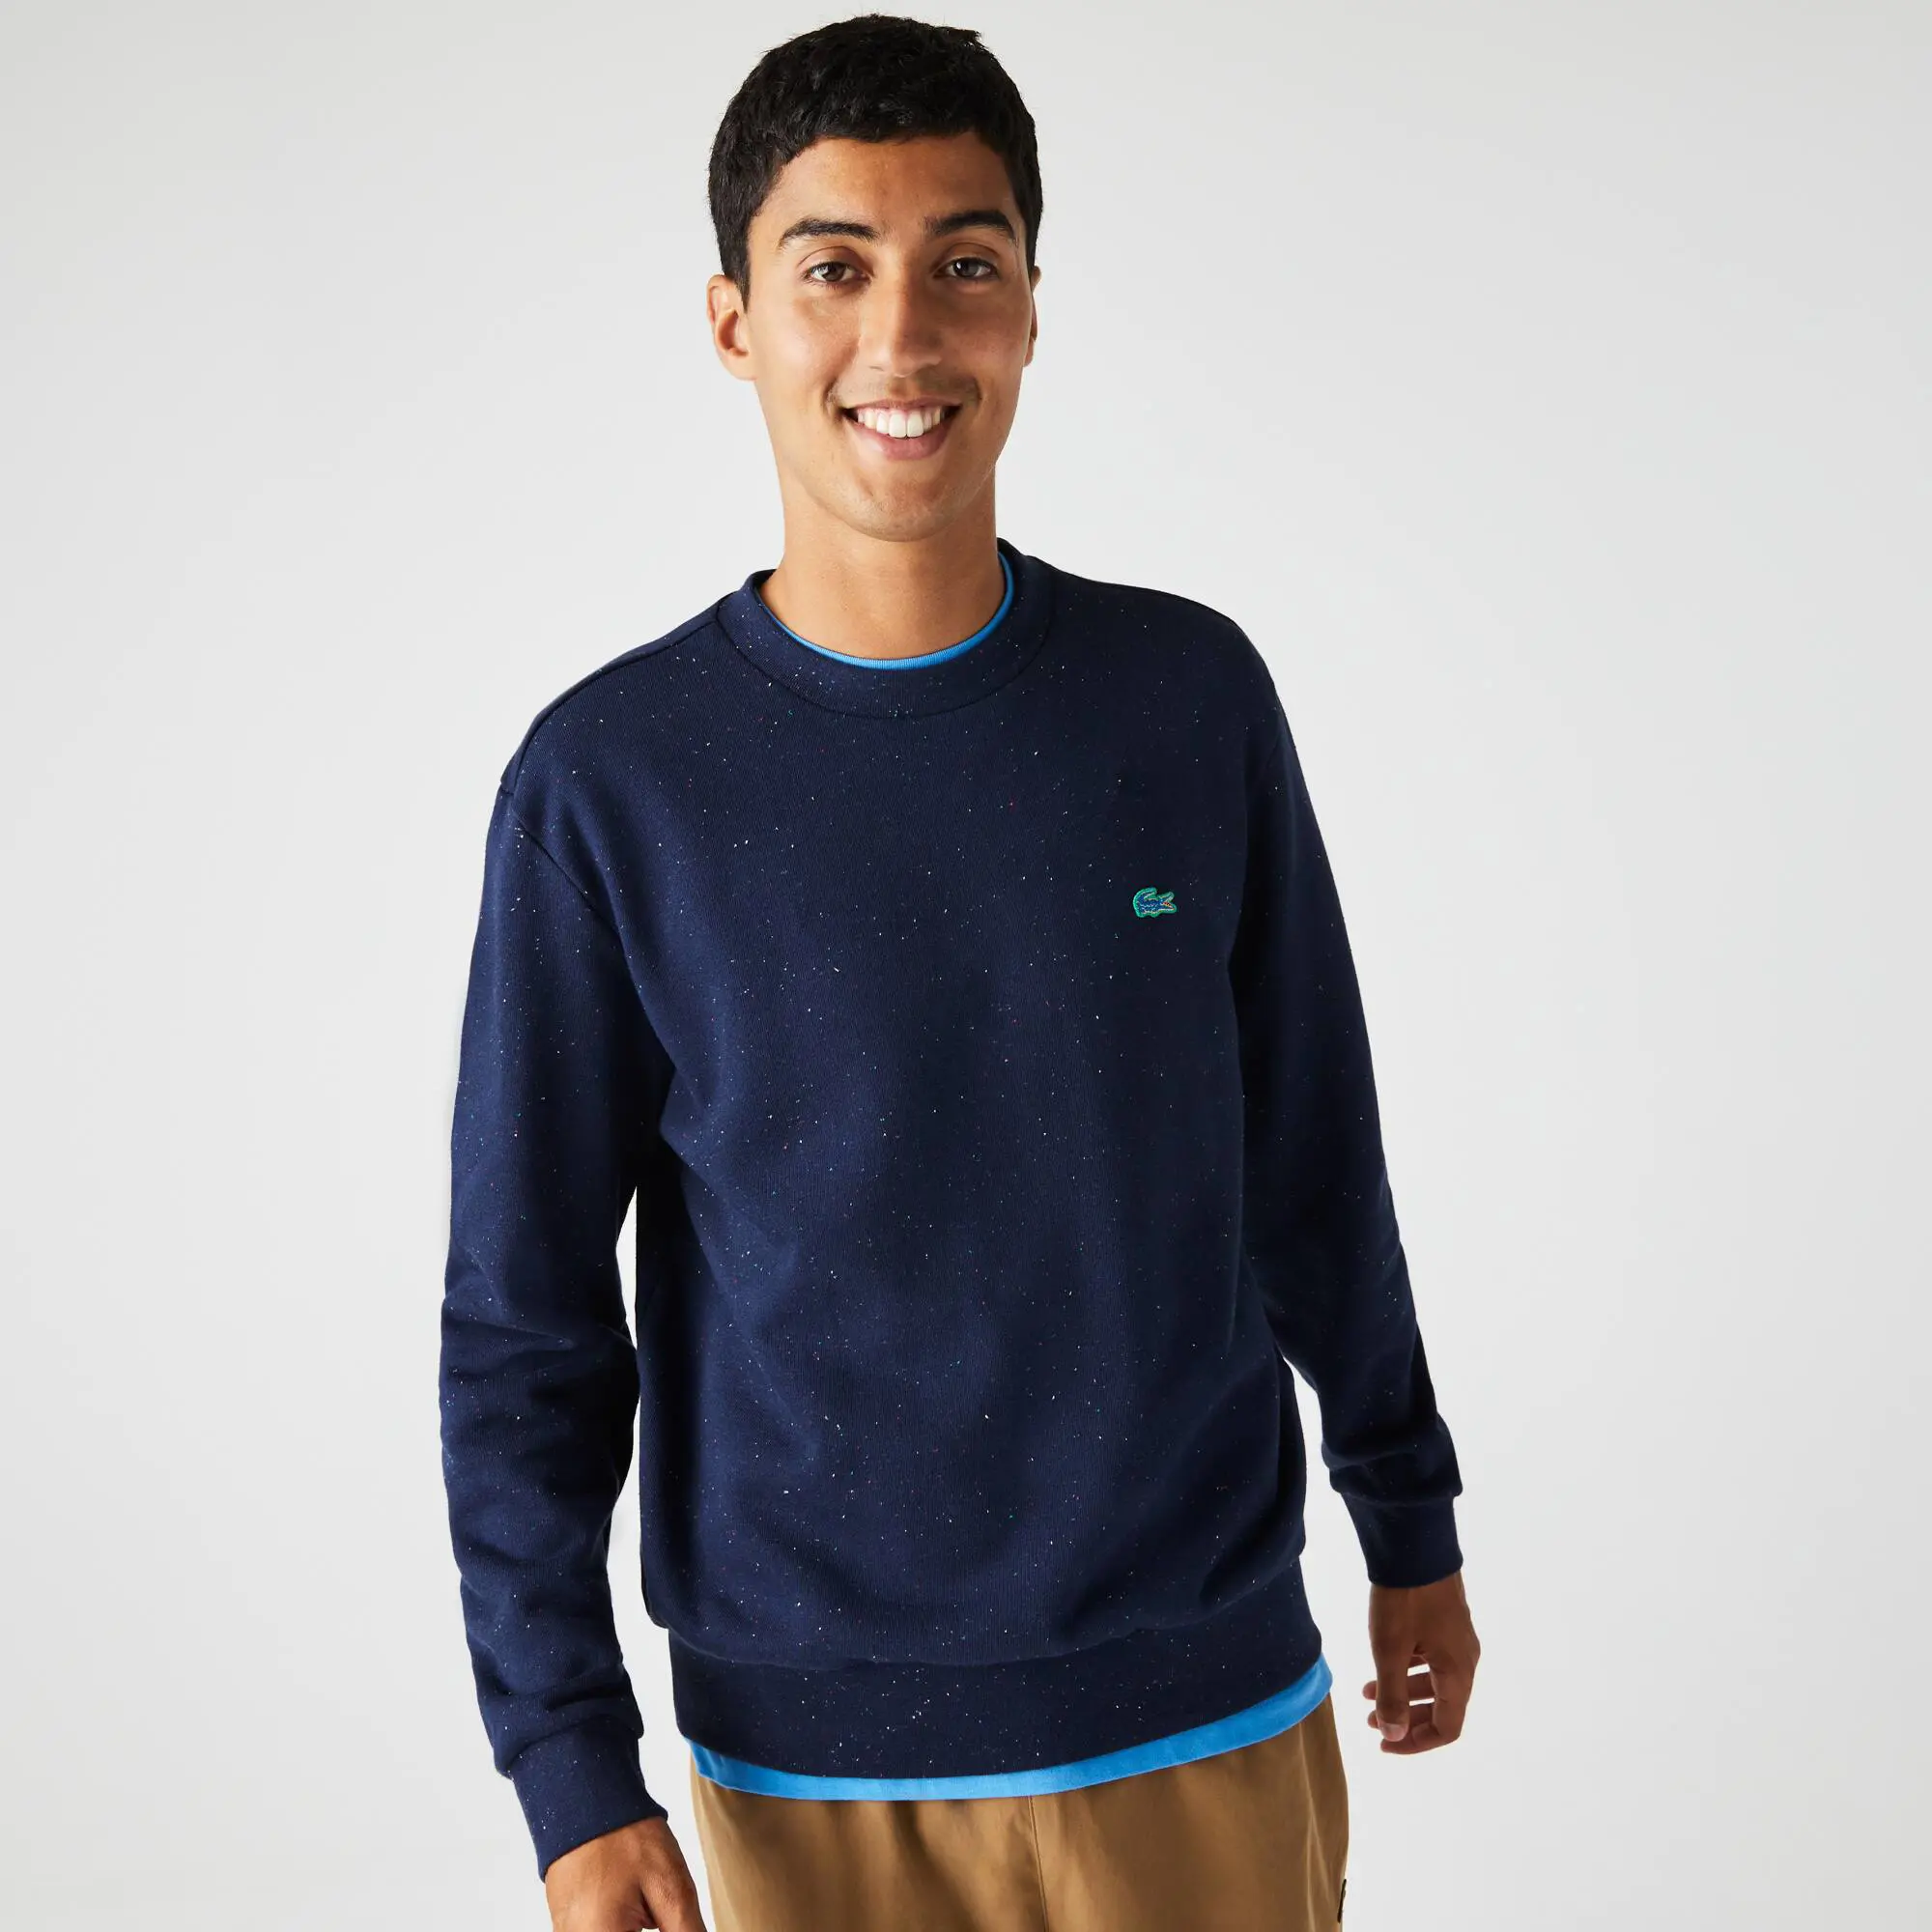 Lacoste Men's Lacoste Classic Fit Speckled Print Fleece Sweatshirt. 1